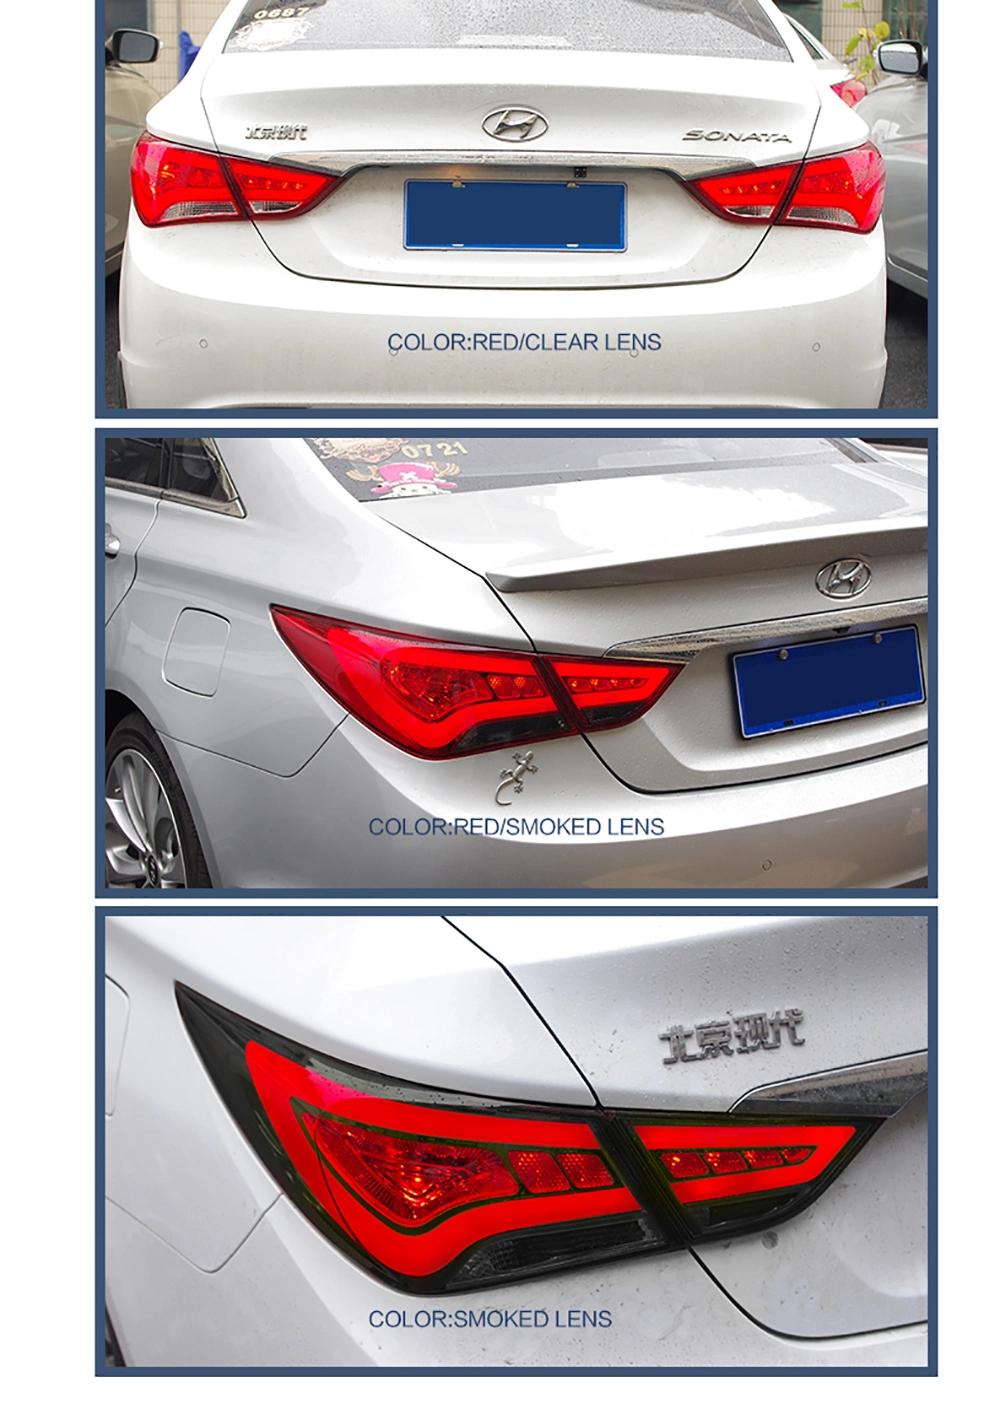 Sonata LED Tail Light Taillights Car Light for 2010 2011 2012 2013 2014